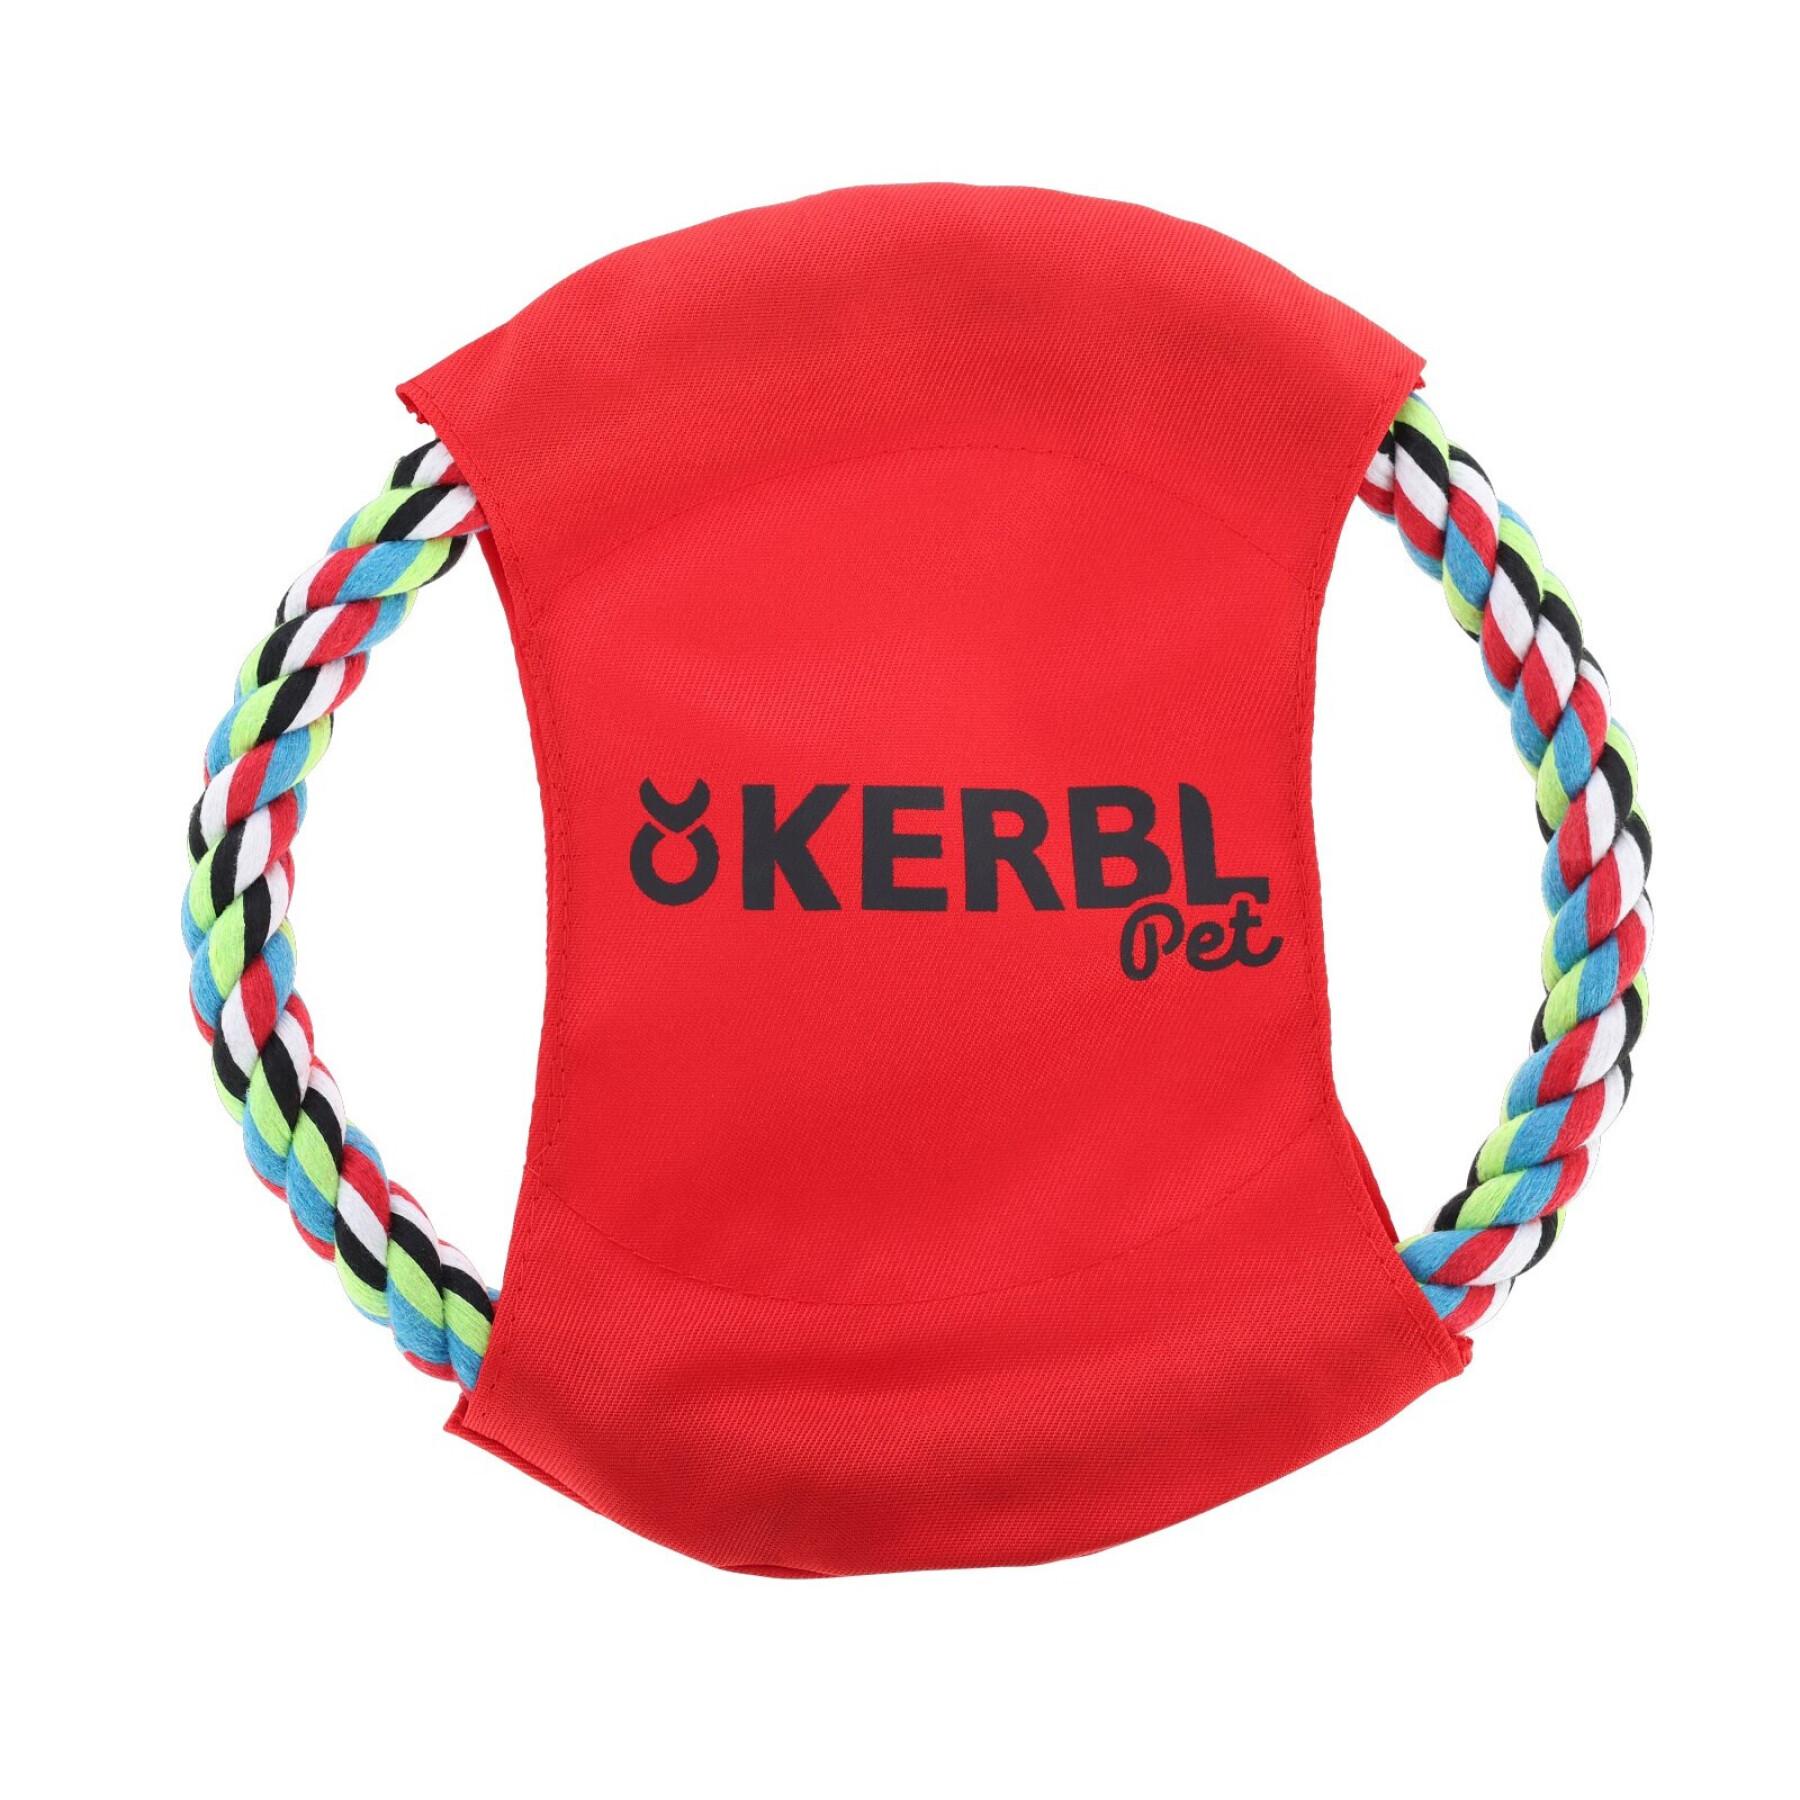 Conjunto de 3 frisbees de algodão/nylon Kerbl